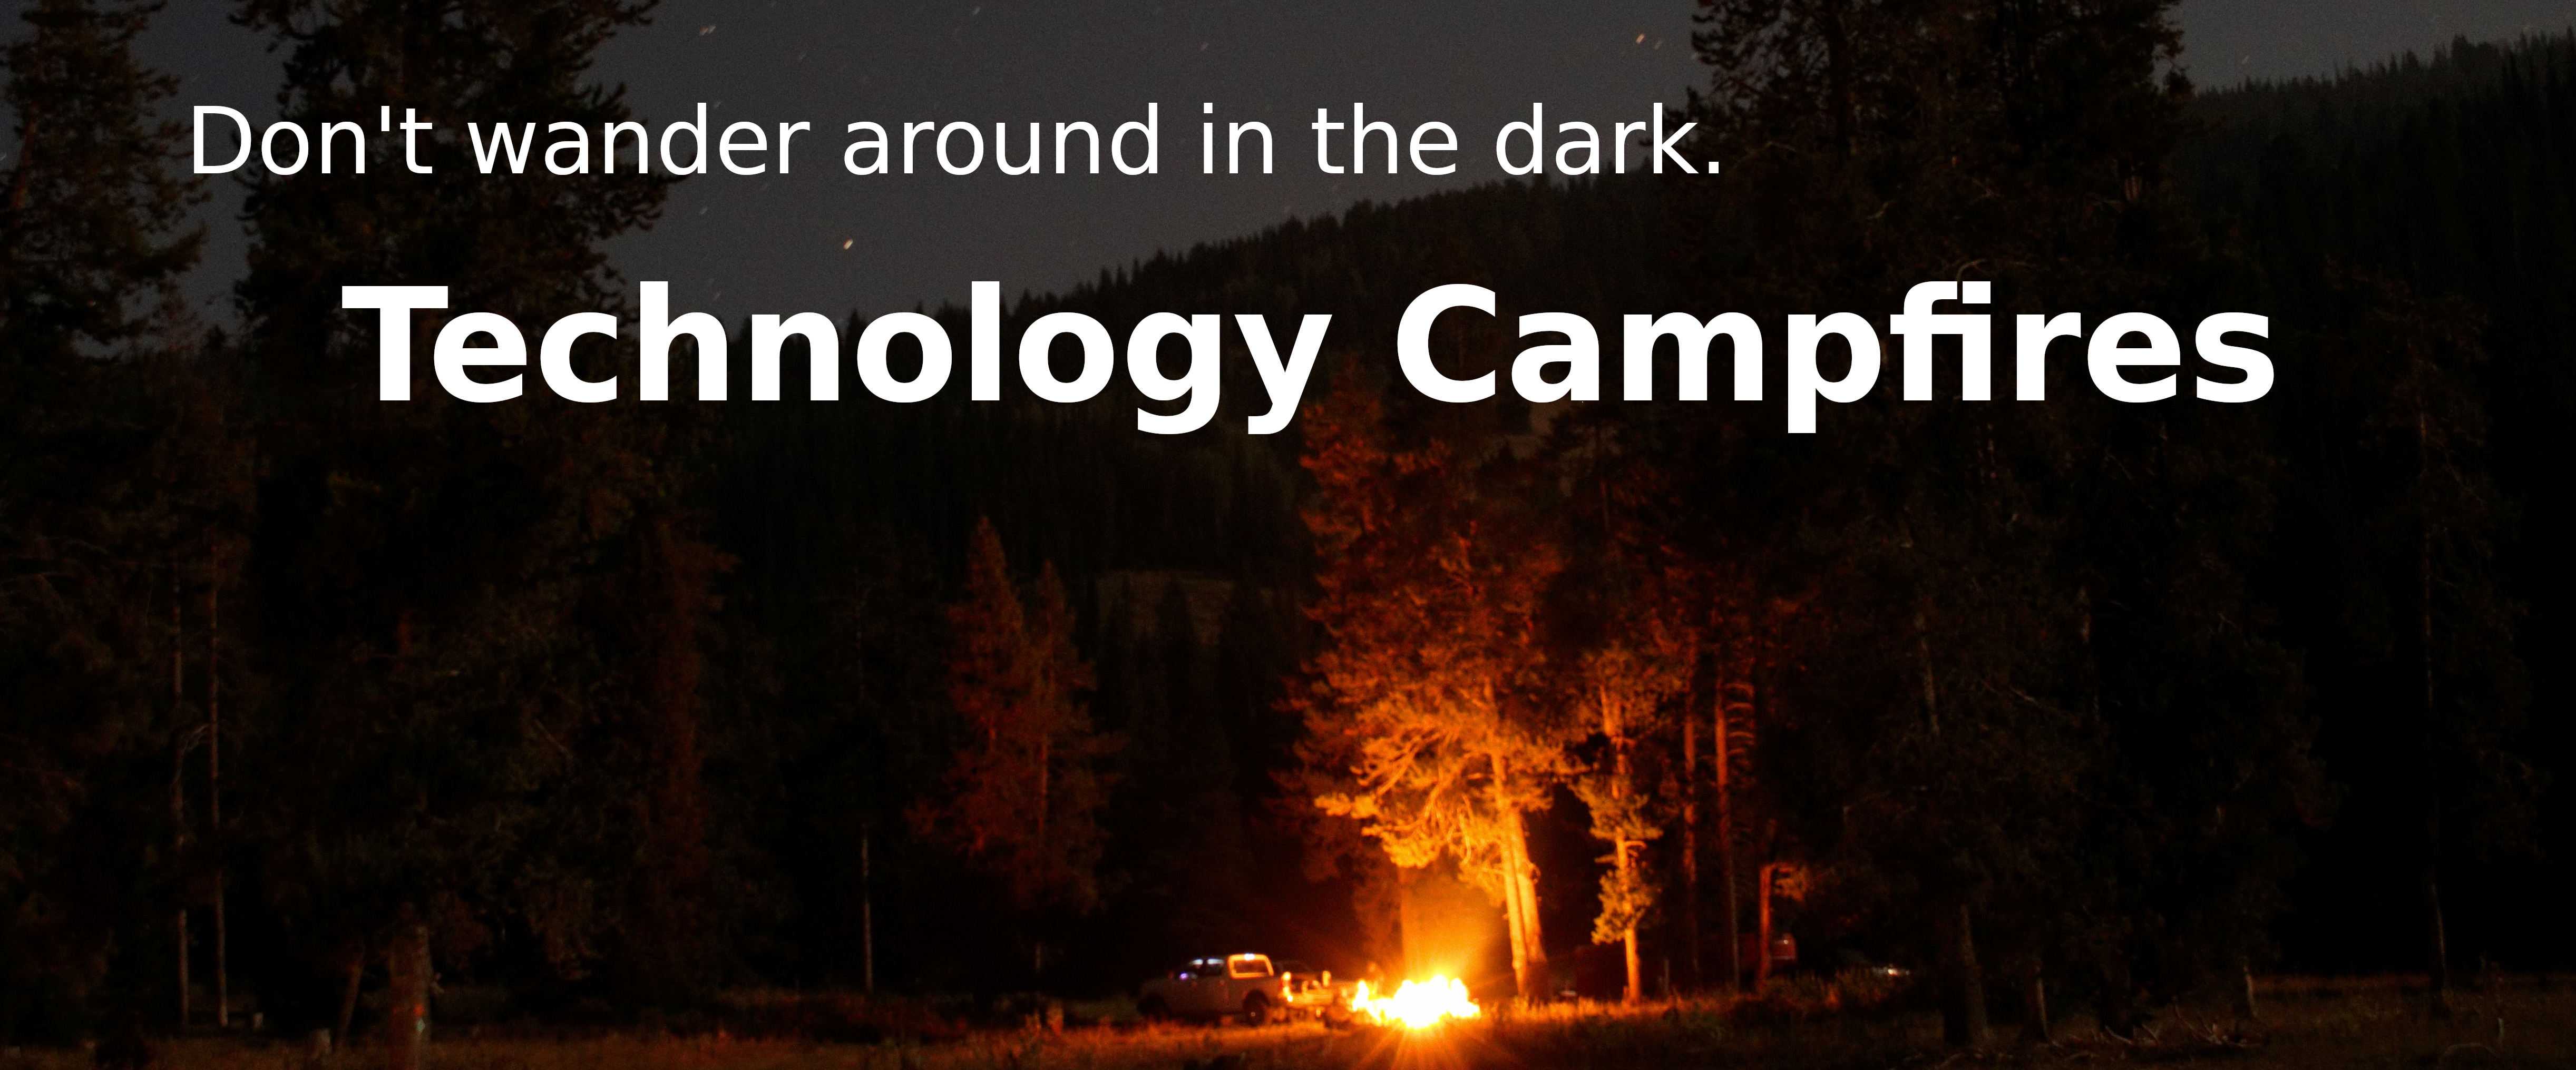 Technology Campfires